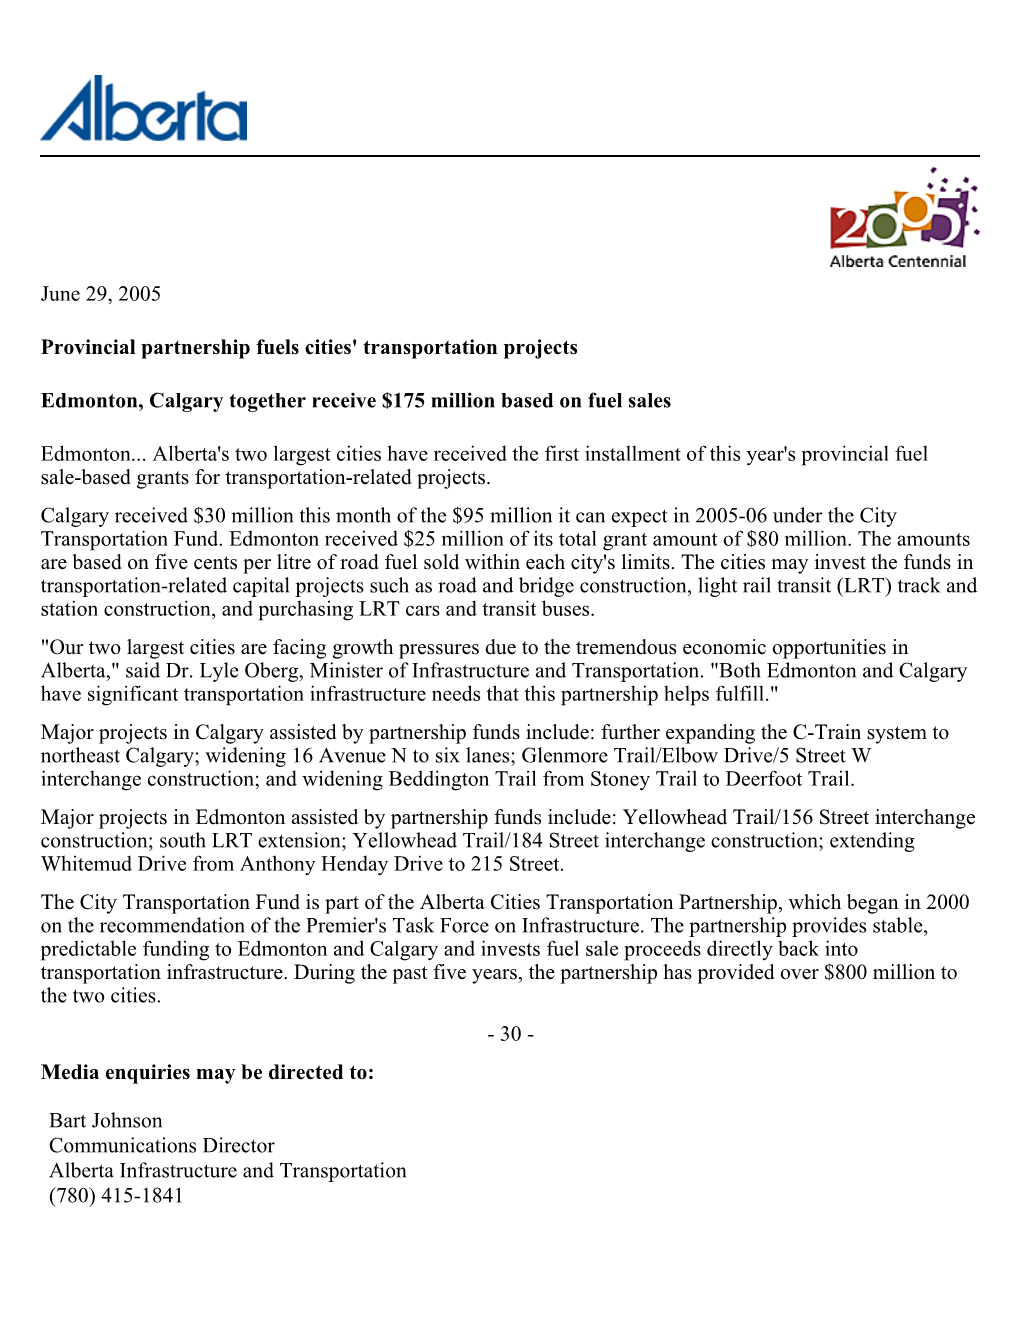 June 29, 2005 Provincial Partnership Fuels Cities' Transportation Projects